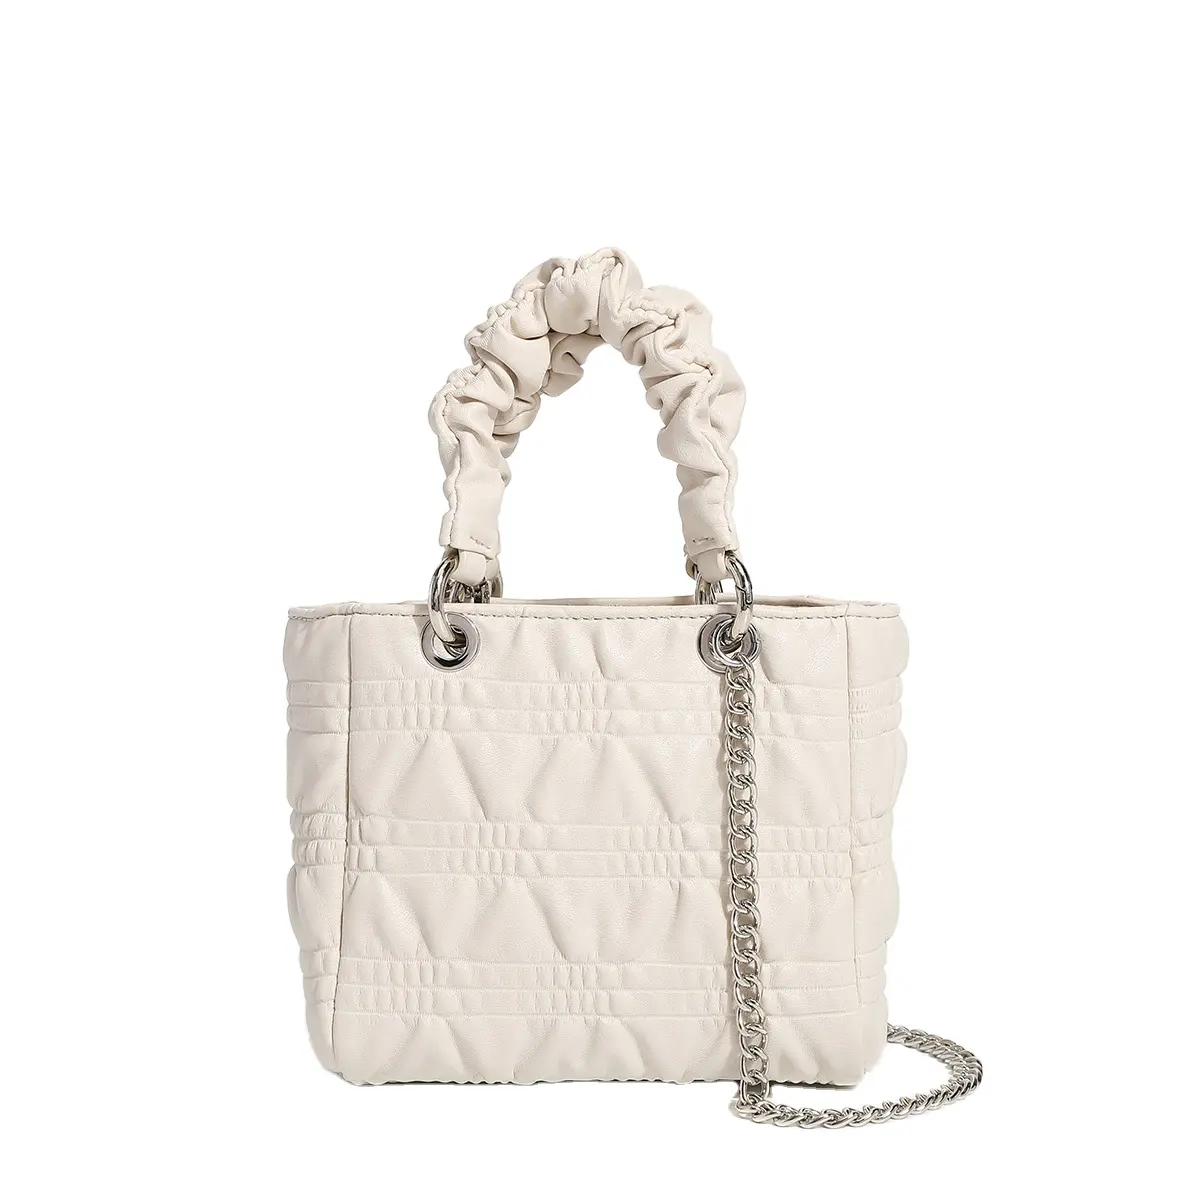 Design Oem Handbags Fashion Ladies Handbags for Shoulder Designer Handbags Famous Brand PU Leather Bag Fashionable Crossbody Bag